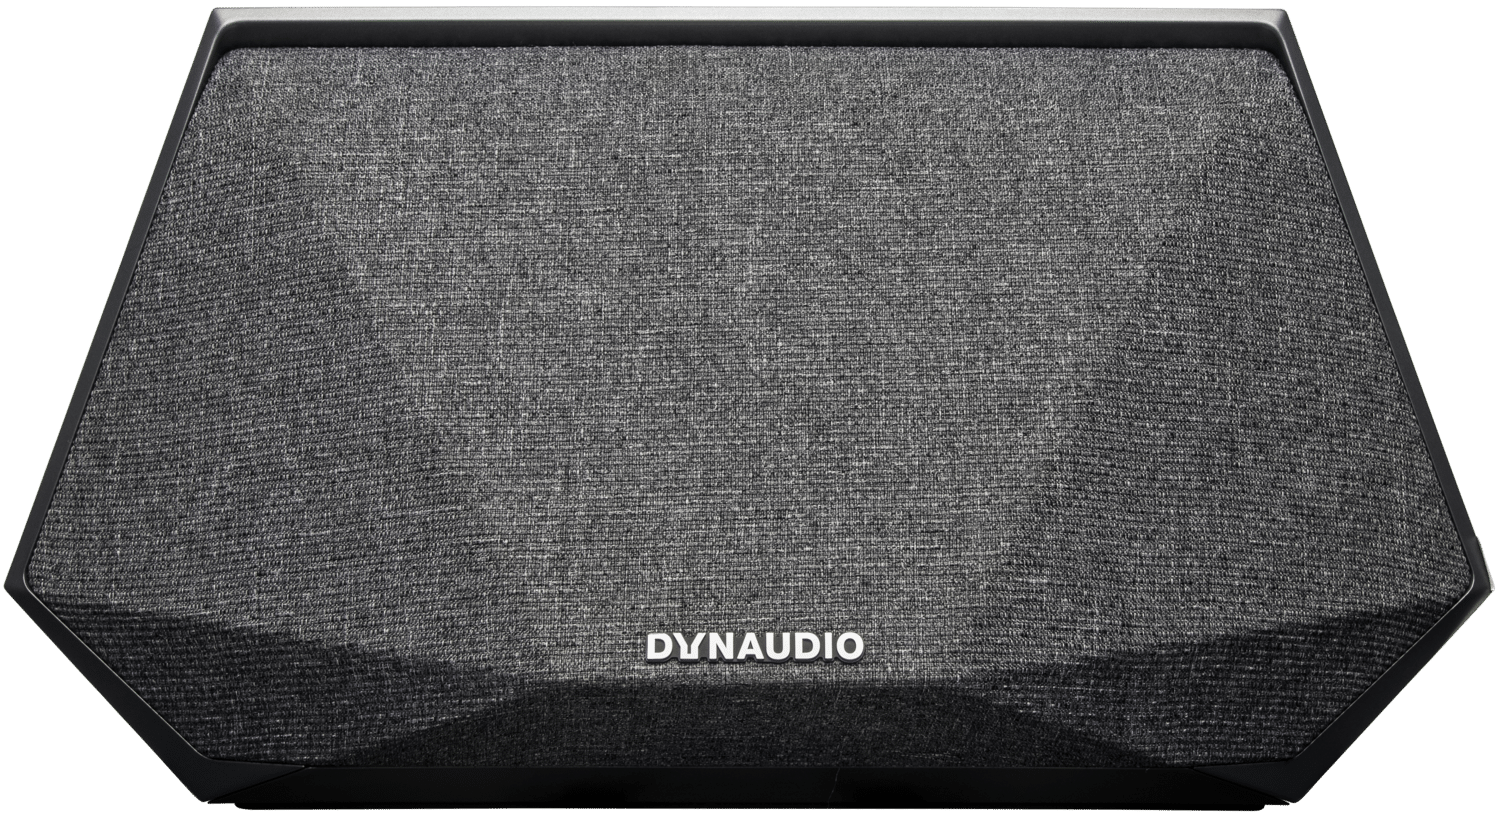 Music Wireless Speakers From Dynaudio